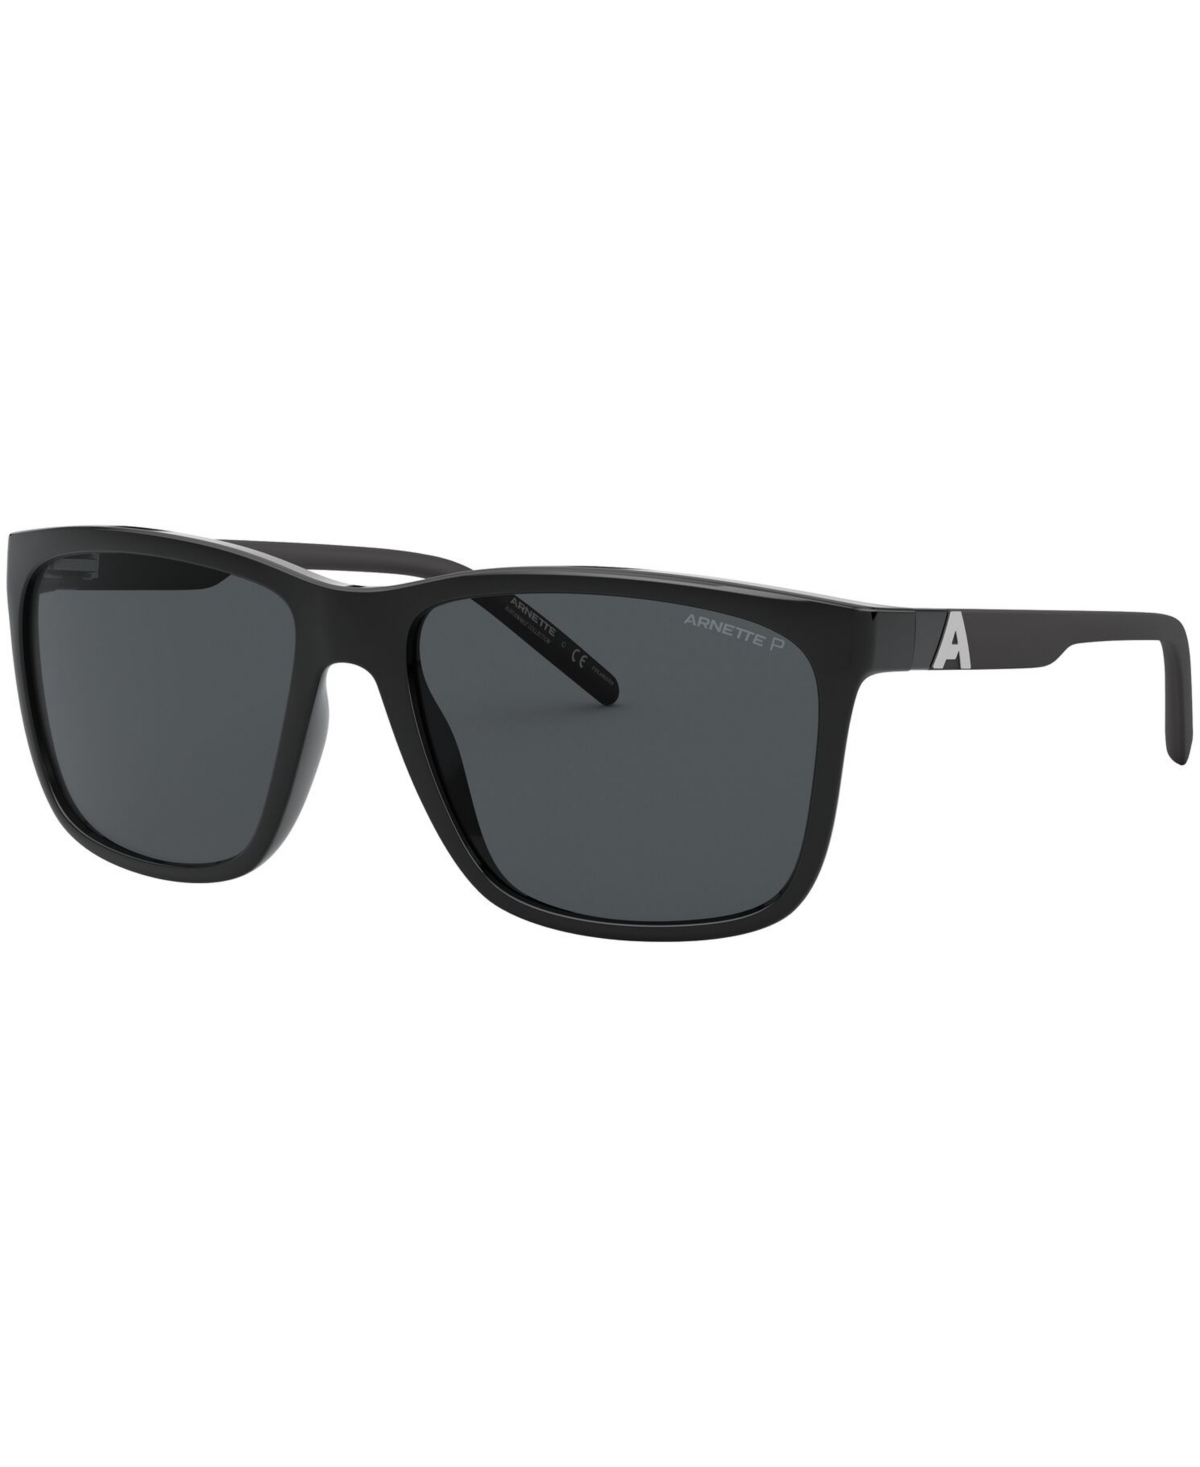 Men's Polarized Sunglasses, AN4272 - BLACK/POLAR GREY